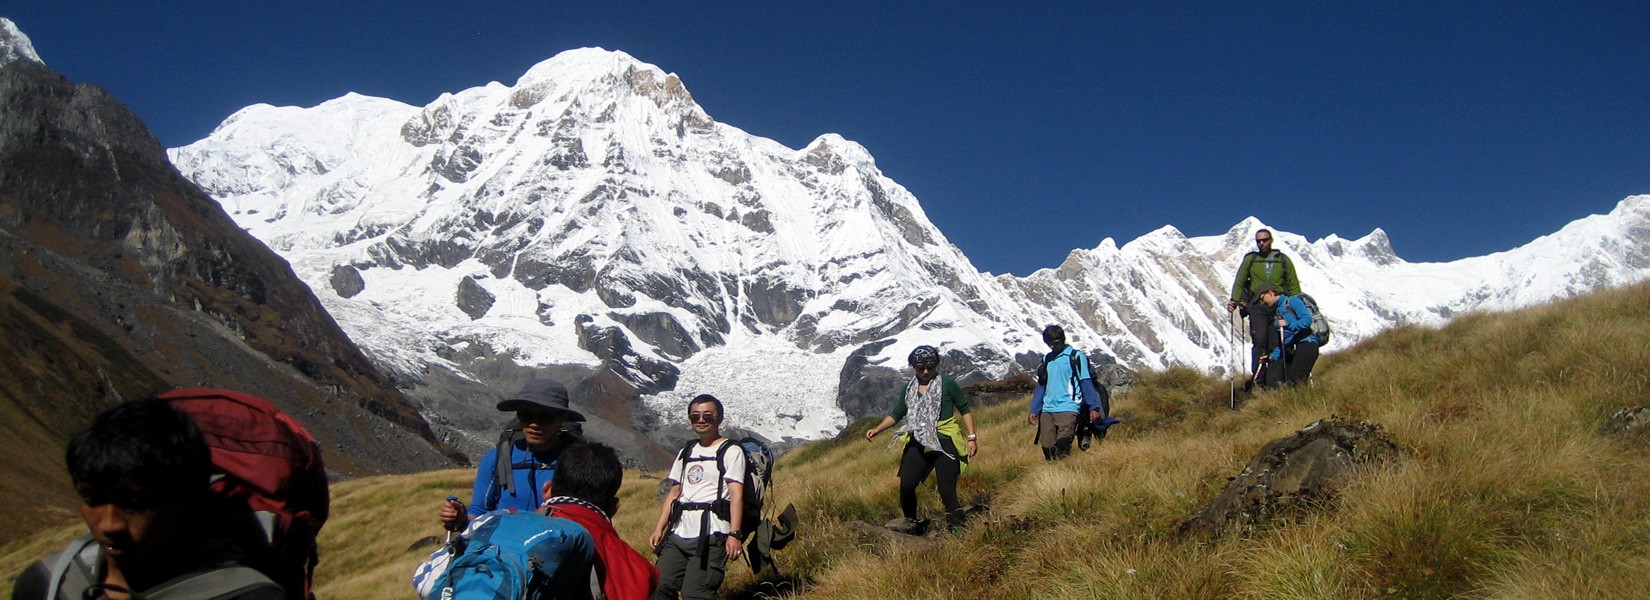 Top 10 reason to do Annapurna Base Camp trek this spring